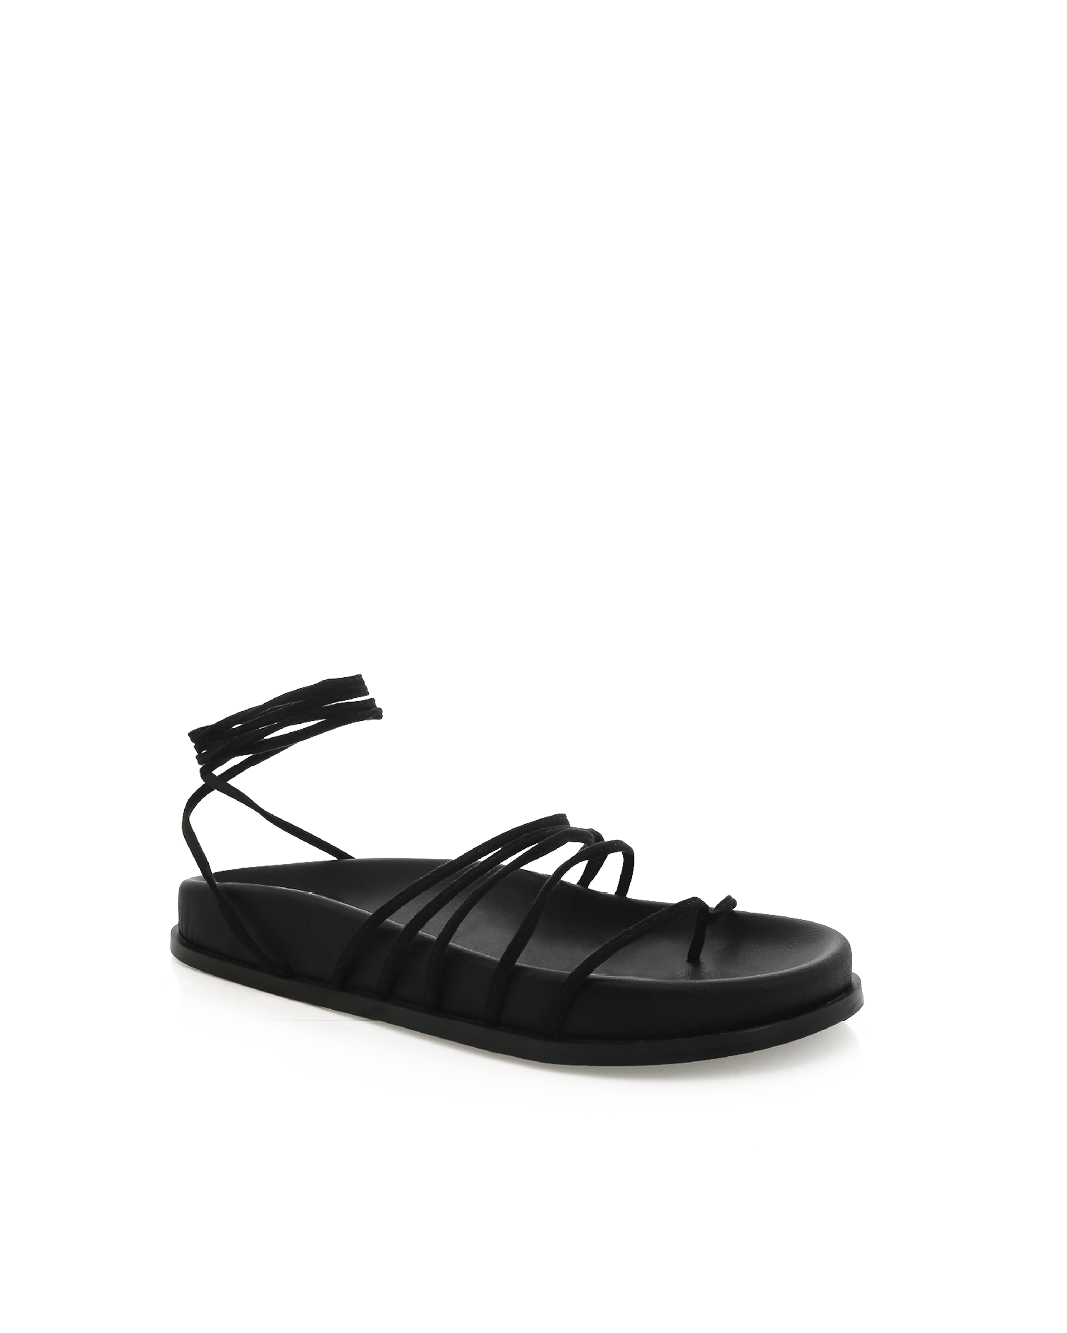 BRIONY - BLACK SUEDE-Sandals-Billini-Billini